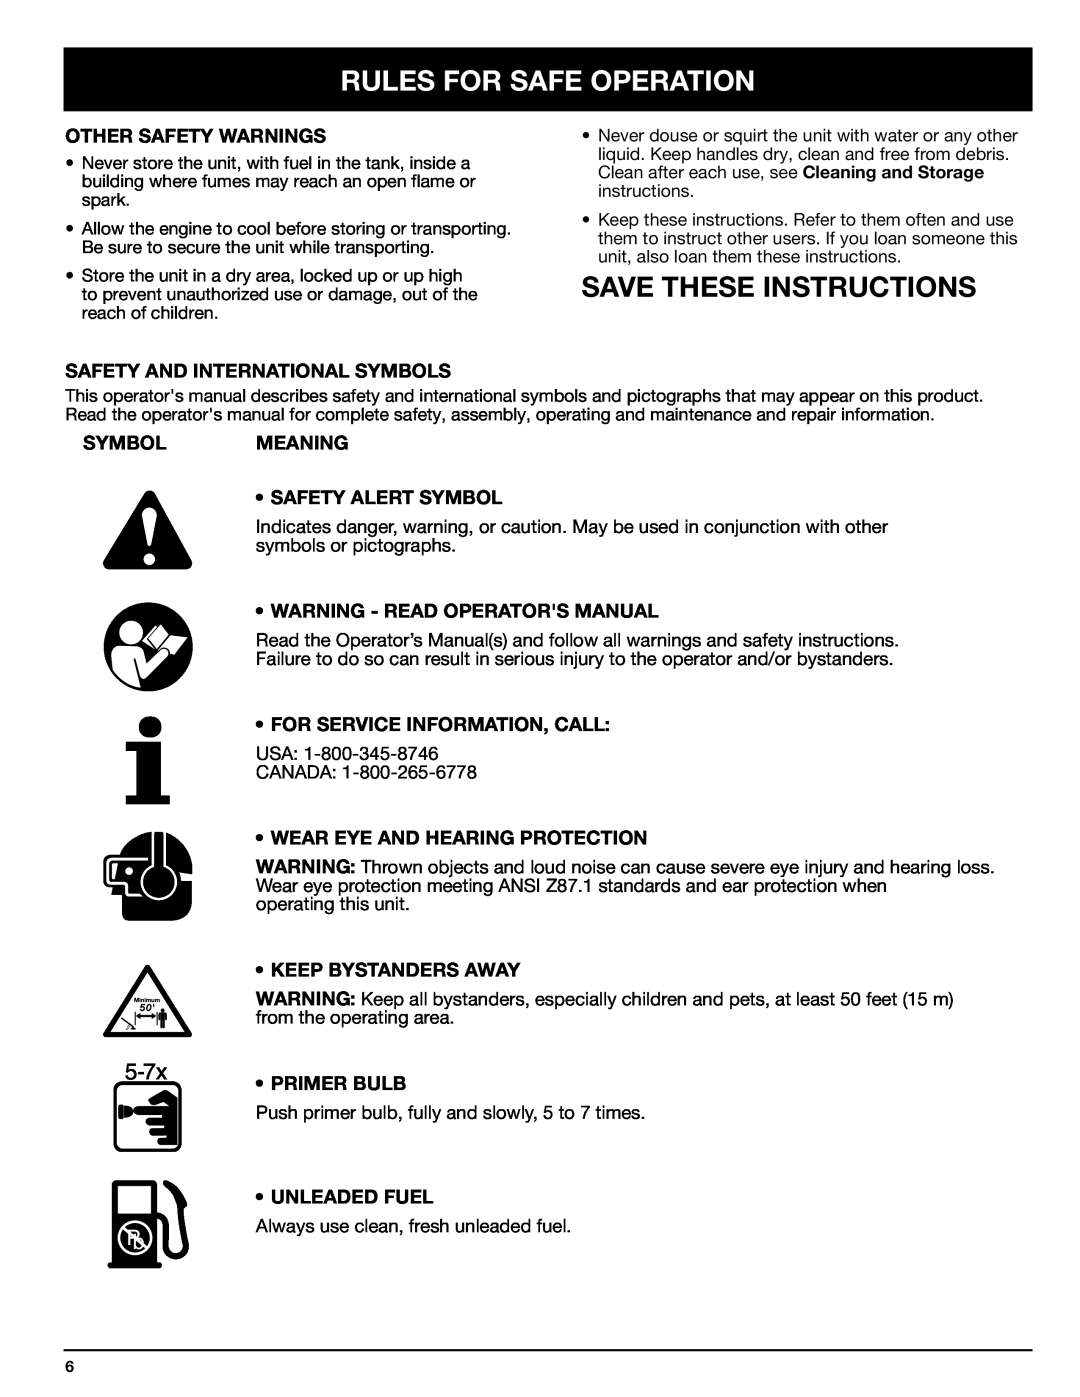 Ryobi 890r manual Other Safety Warnings, Safety And International Symbols, Symbolmeaning Safety Alert Symbol, Primer Bulb 